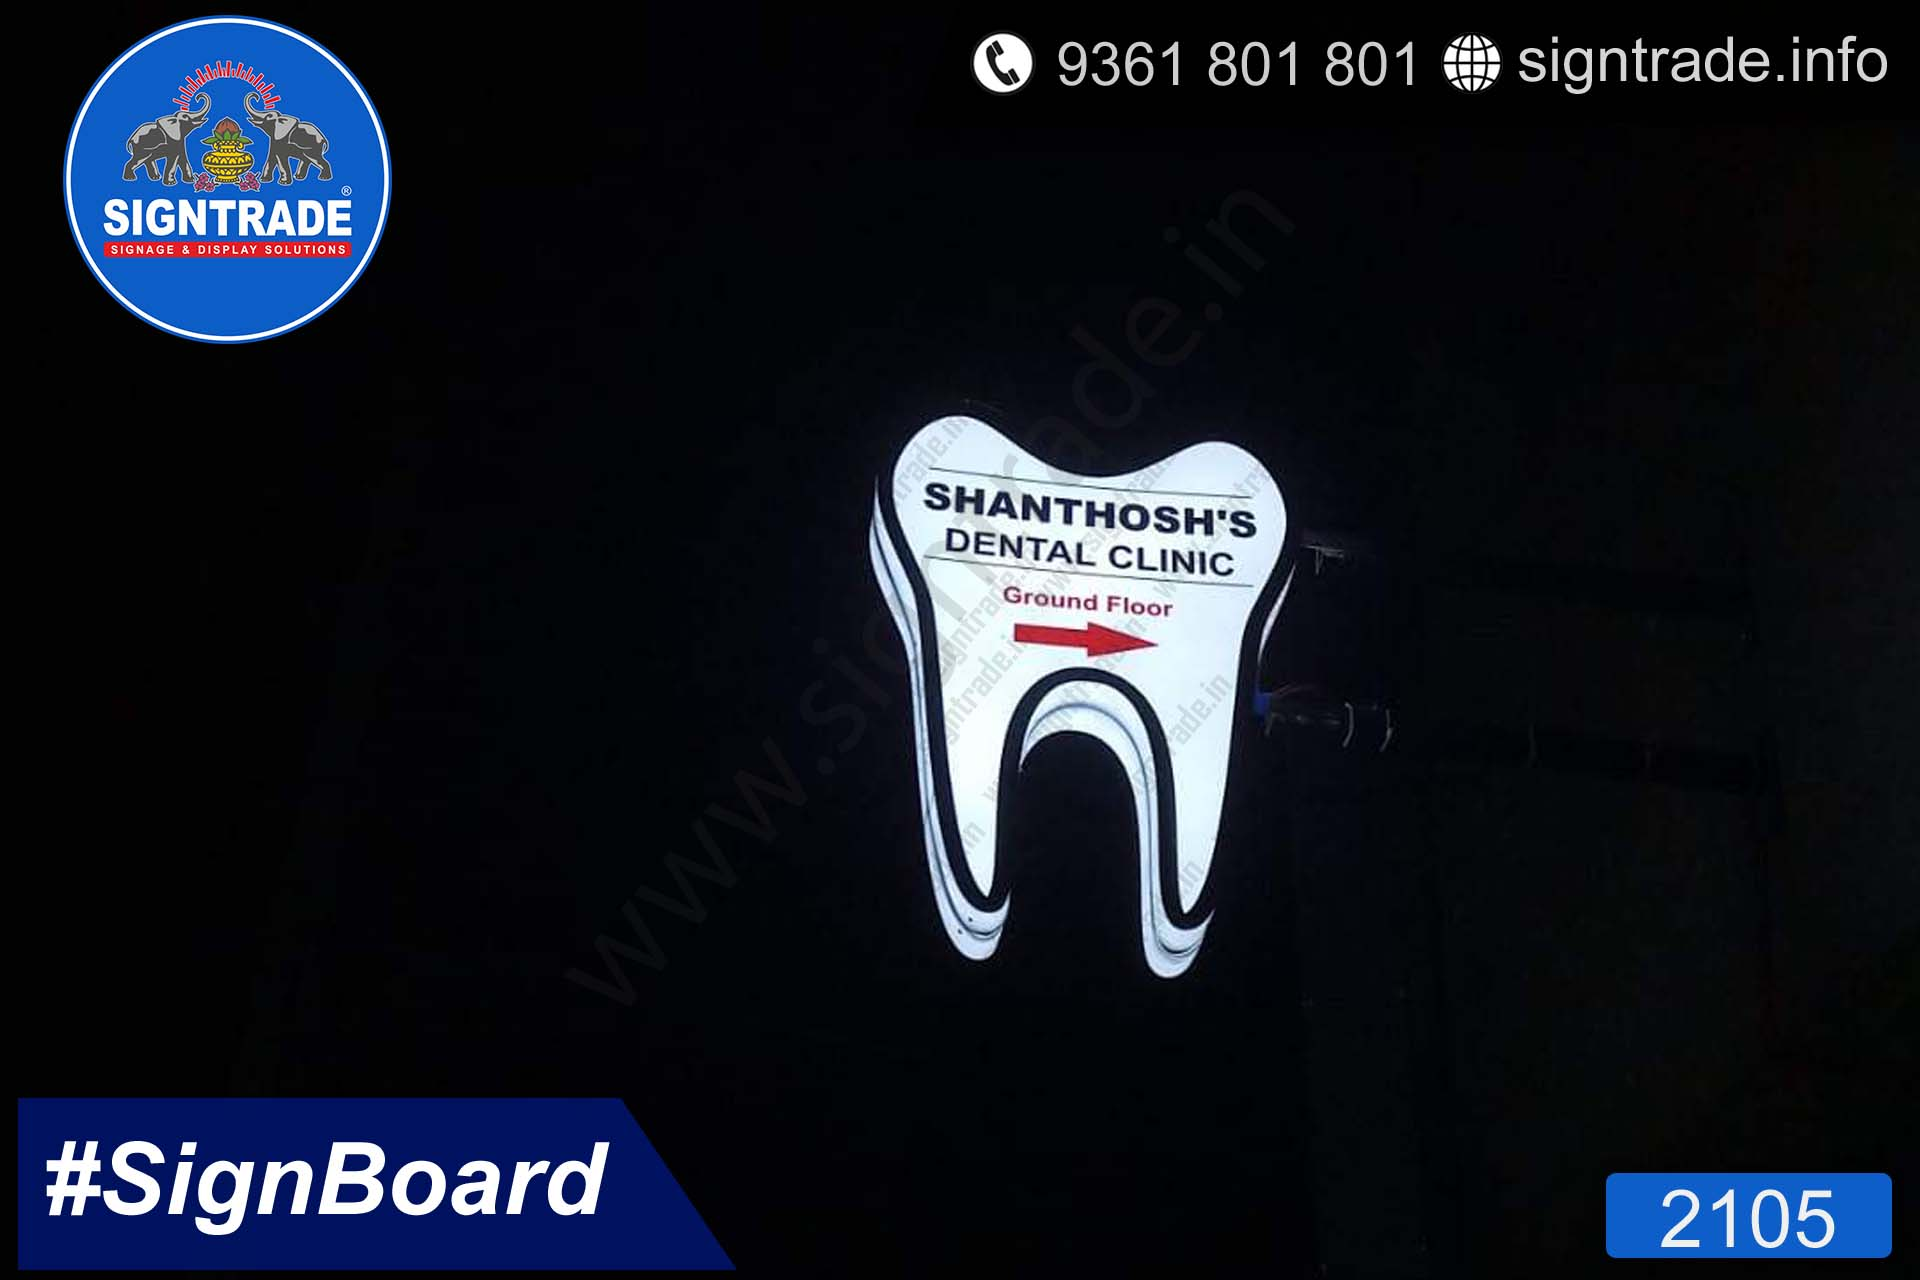 Shanthosh’s Dental Clinic